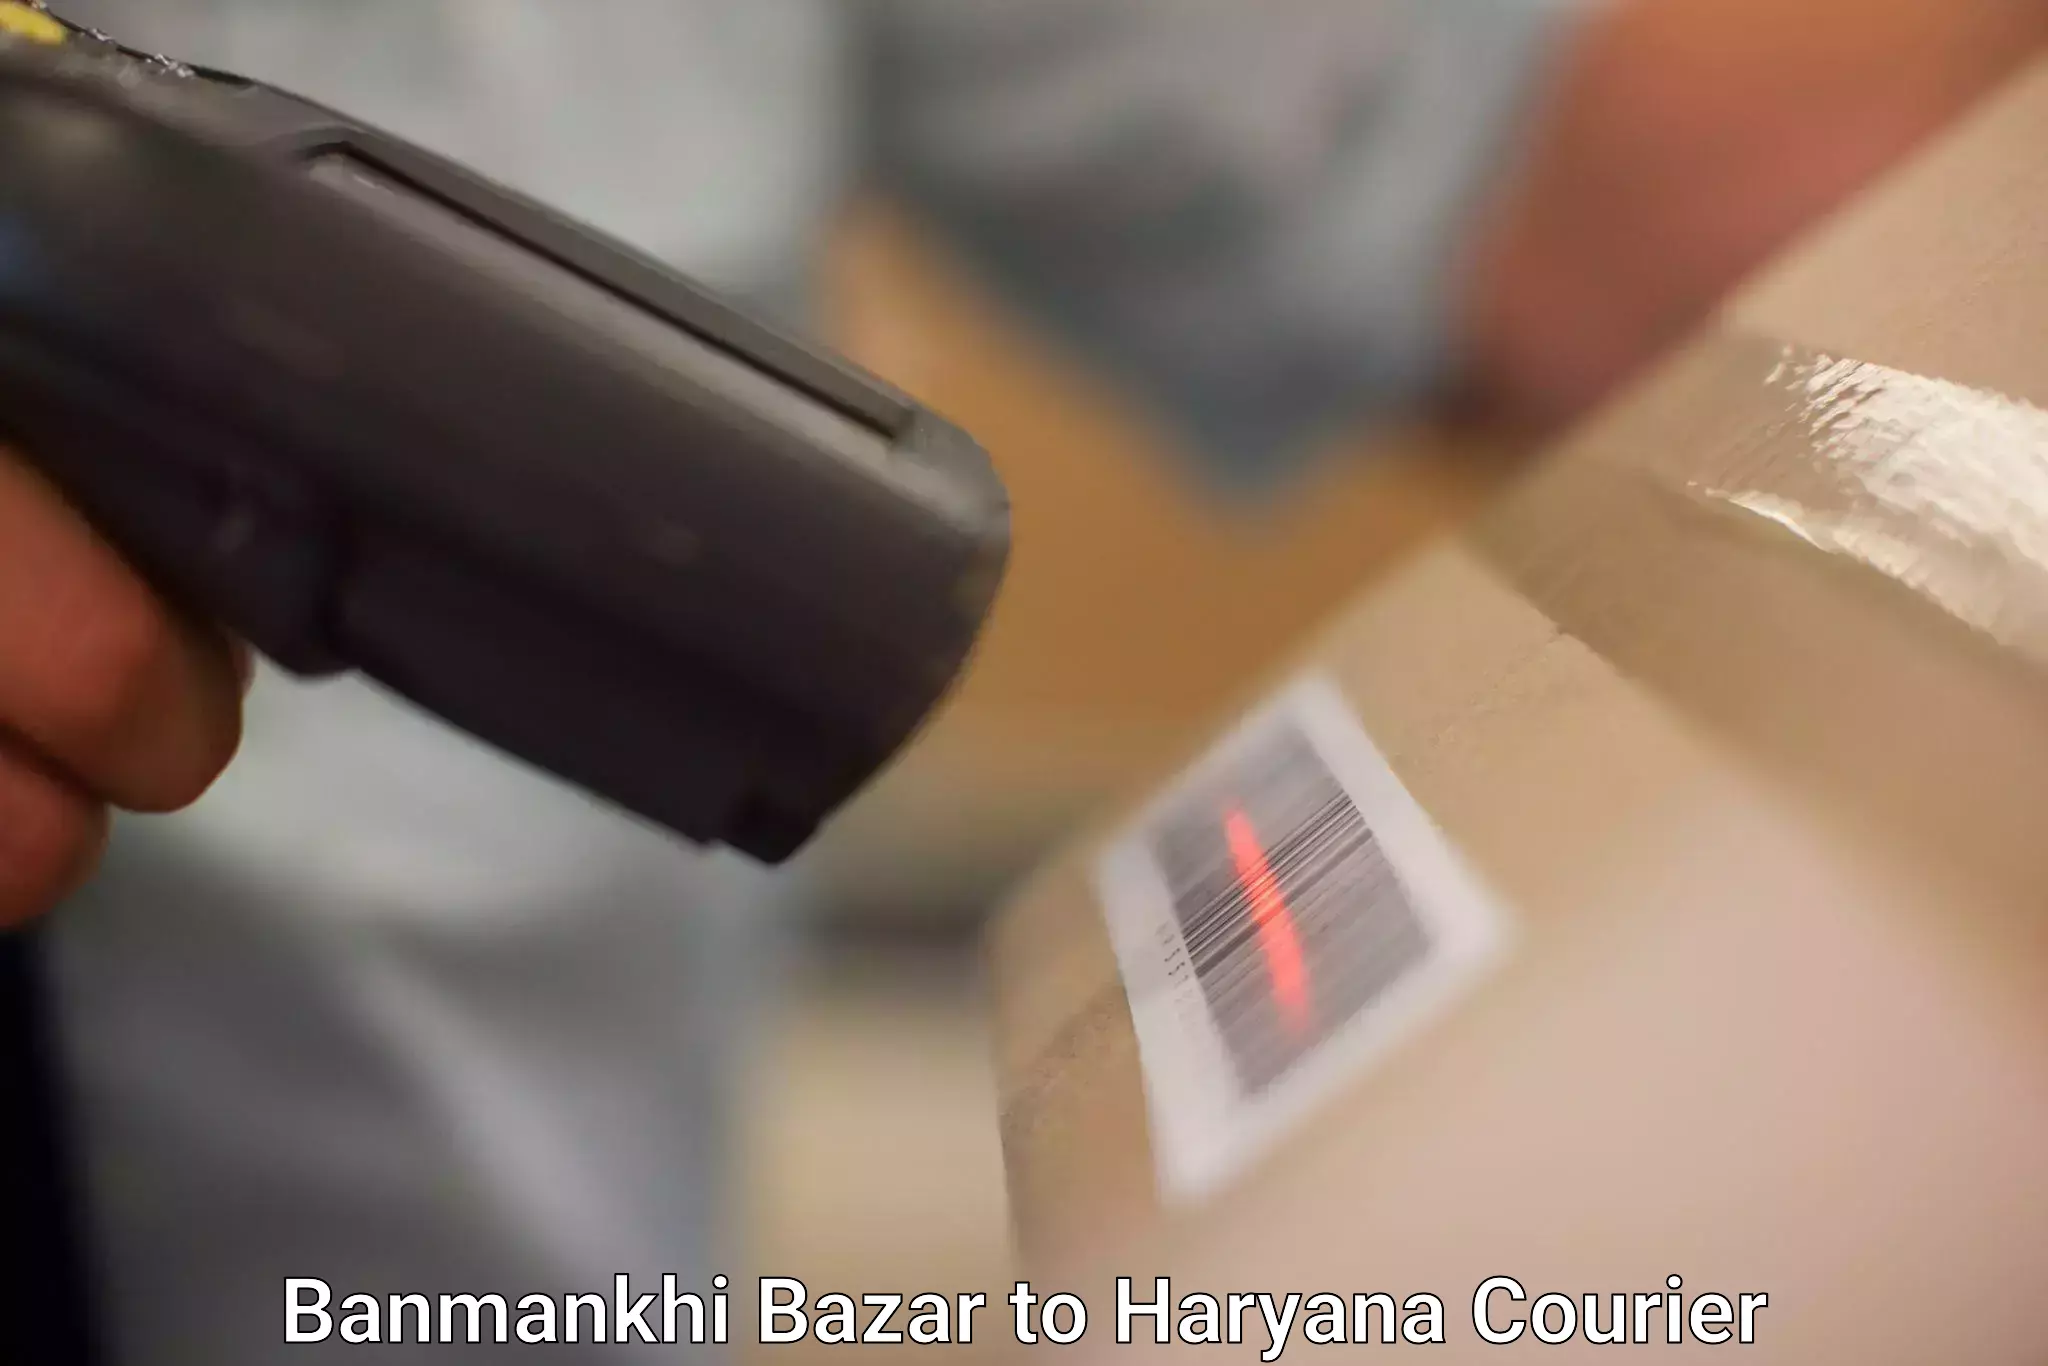 Cargo delivery service Banmankhi Bazar to Haryana